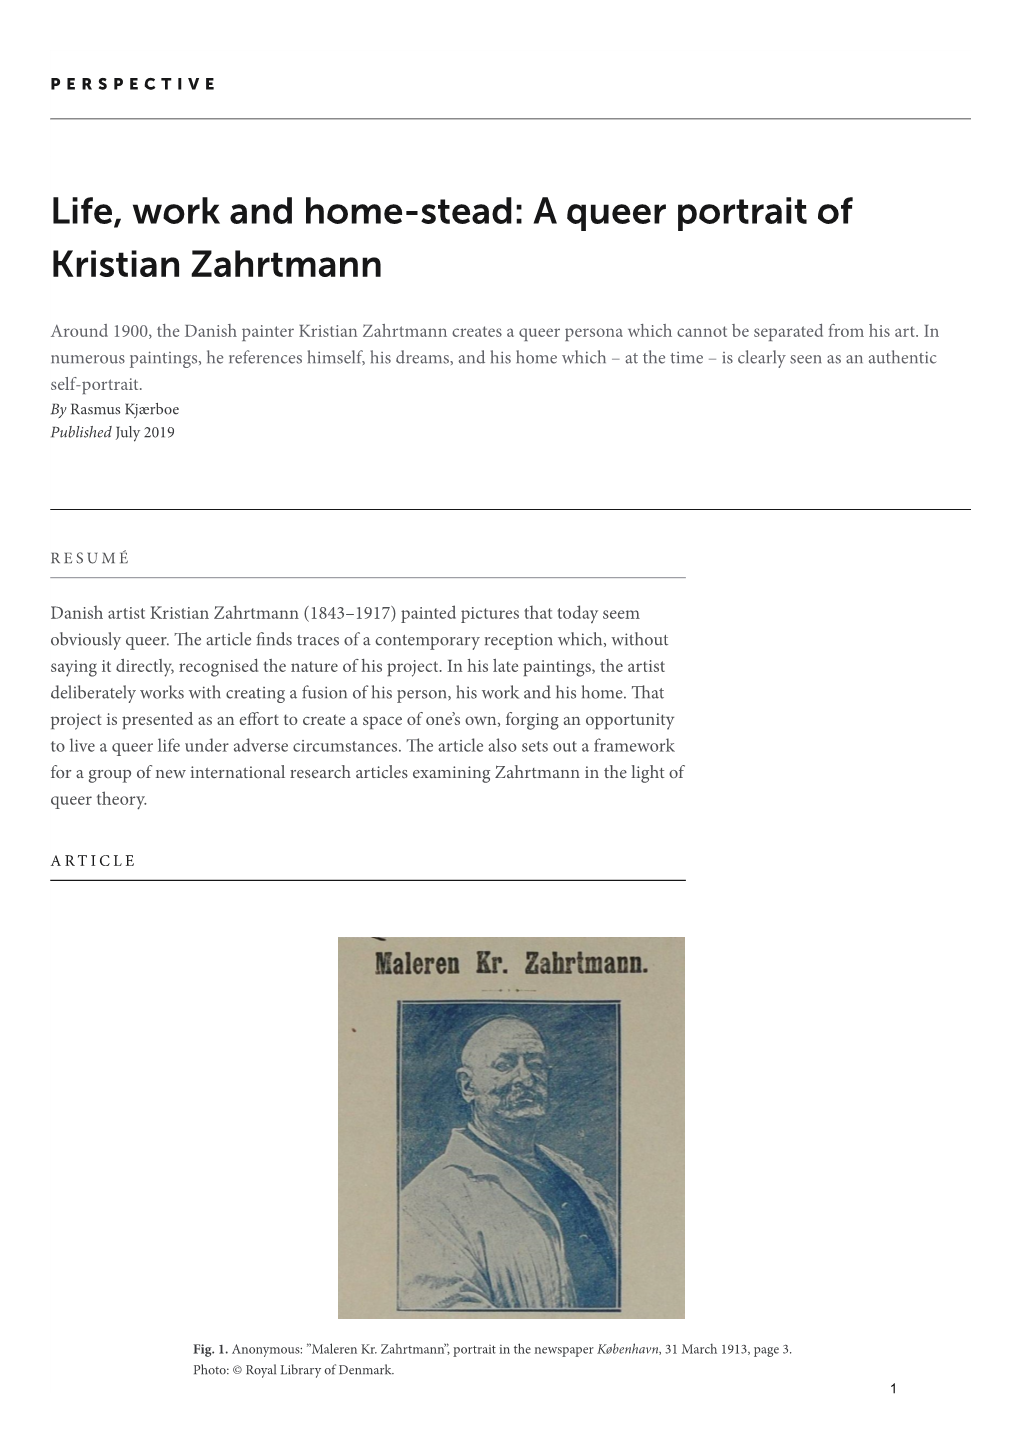 A Queer Portrait of Kristian Zahrtmann